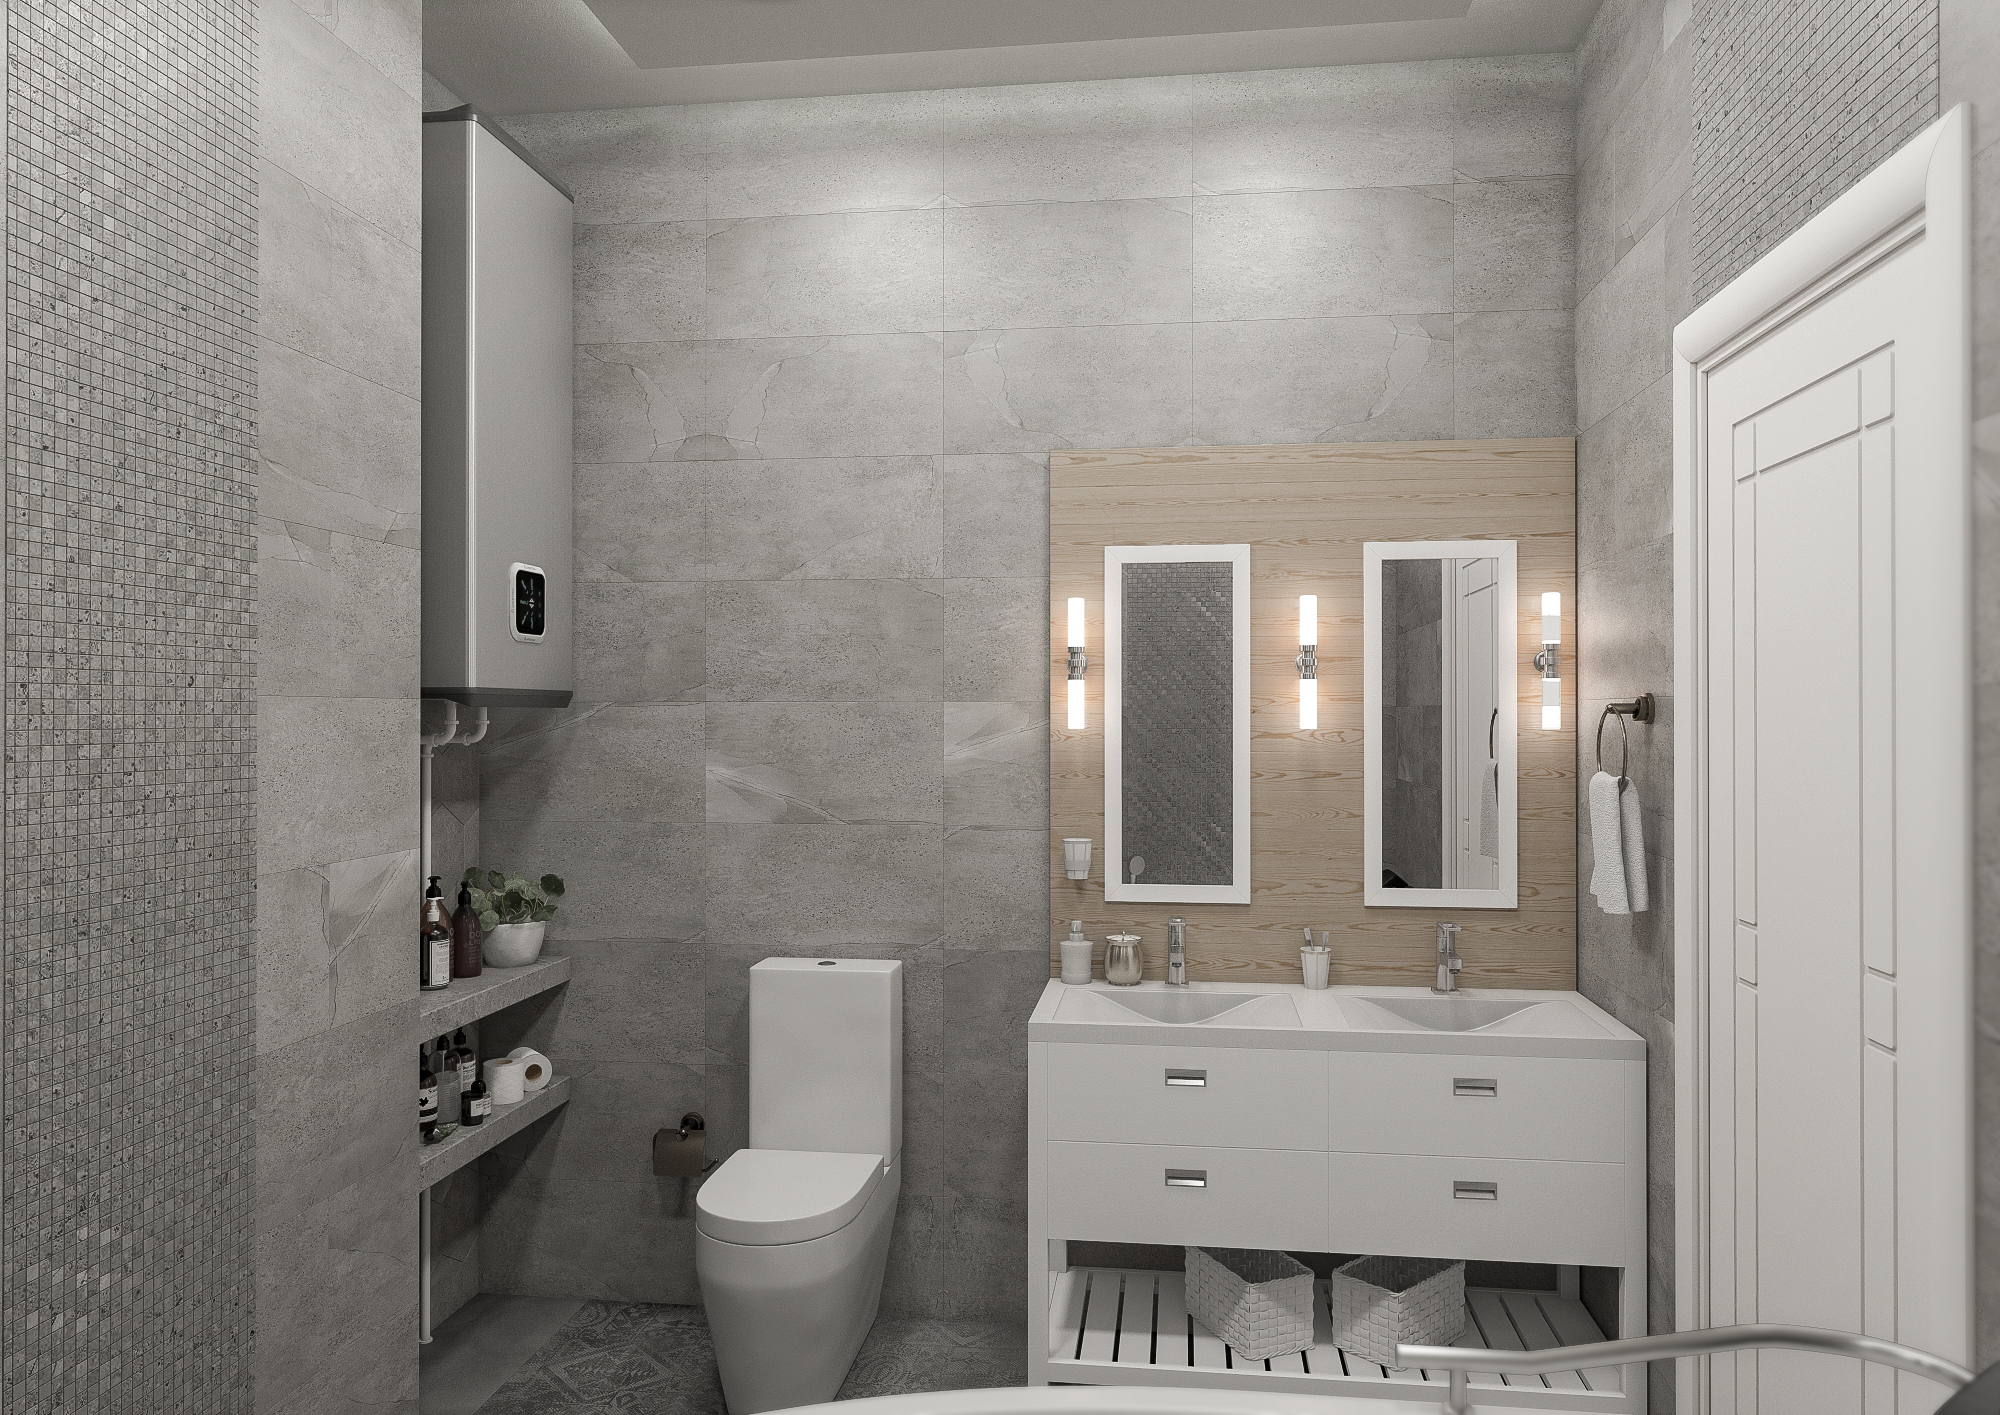 Bathroom dans 3d max vray 3.0 image